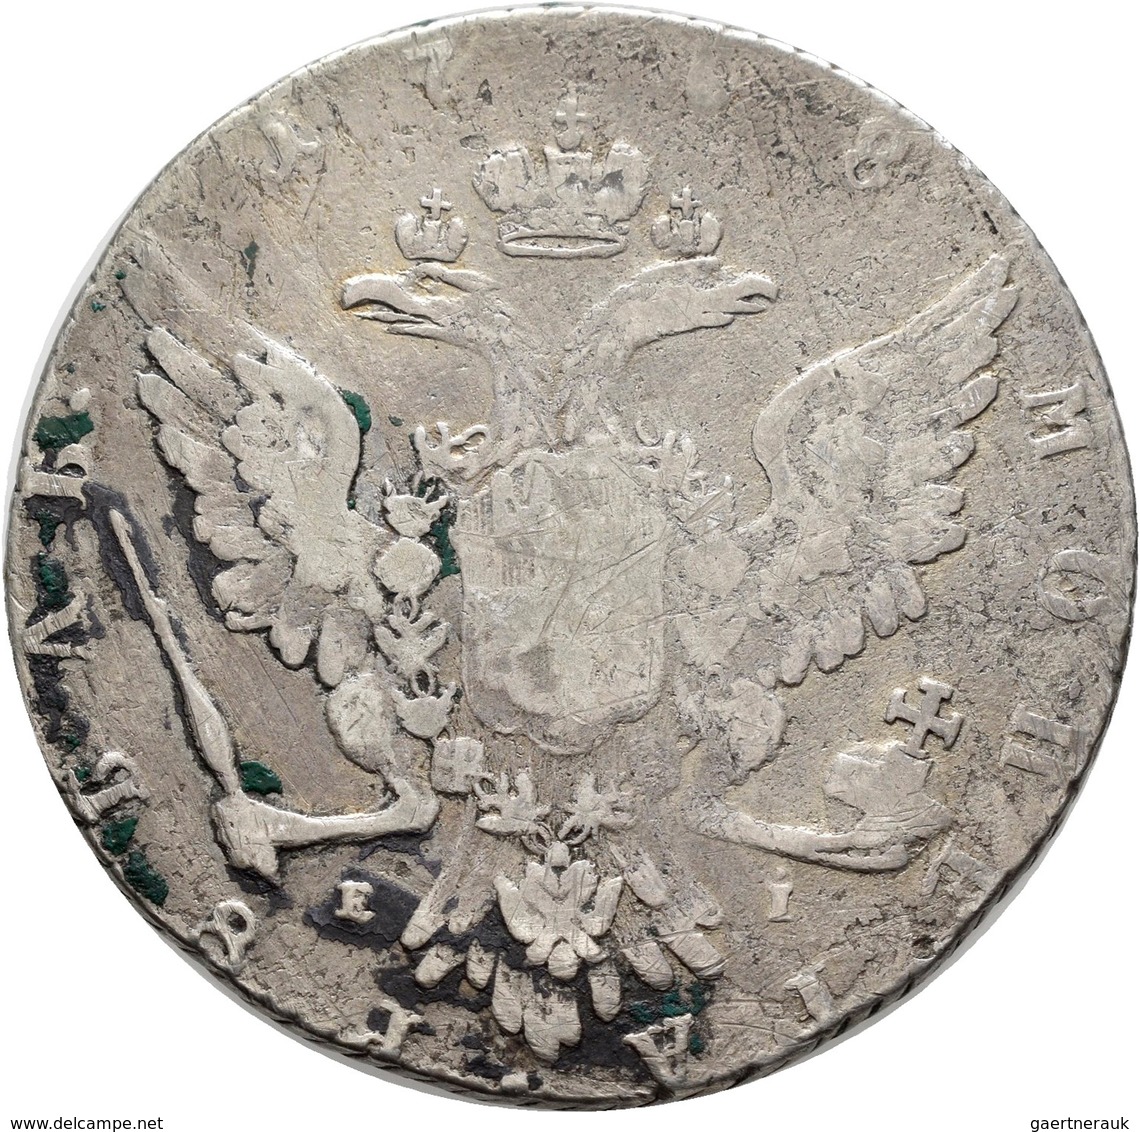 Russland: Katharina II. Die Große 1762-1796: Lot 2 Stück; 1 Rubel 1768 + 1 Rubel 1774; Davenport 168 - Rusland